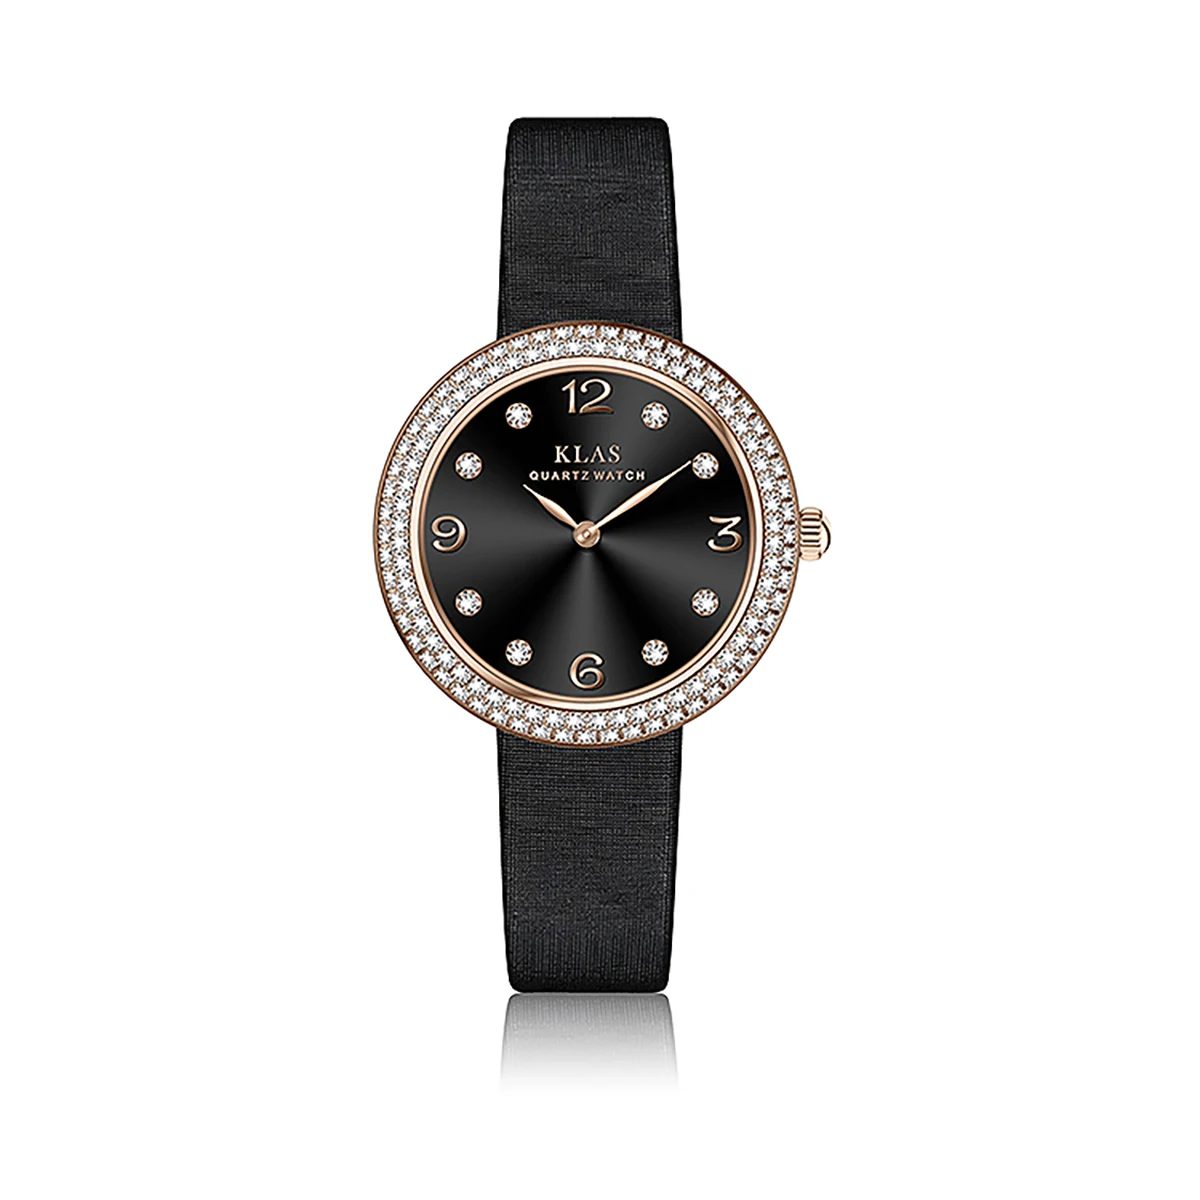 Ordinary Ladies Watch Romantic Round 316 Stainless Steel Dial Womens Quartz Watch Fashion Gift Watch  KLAS Brand